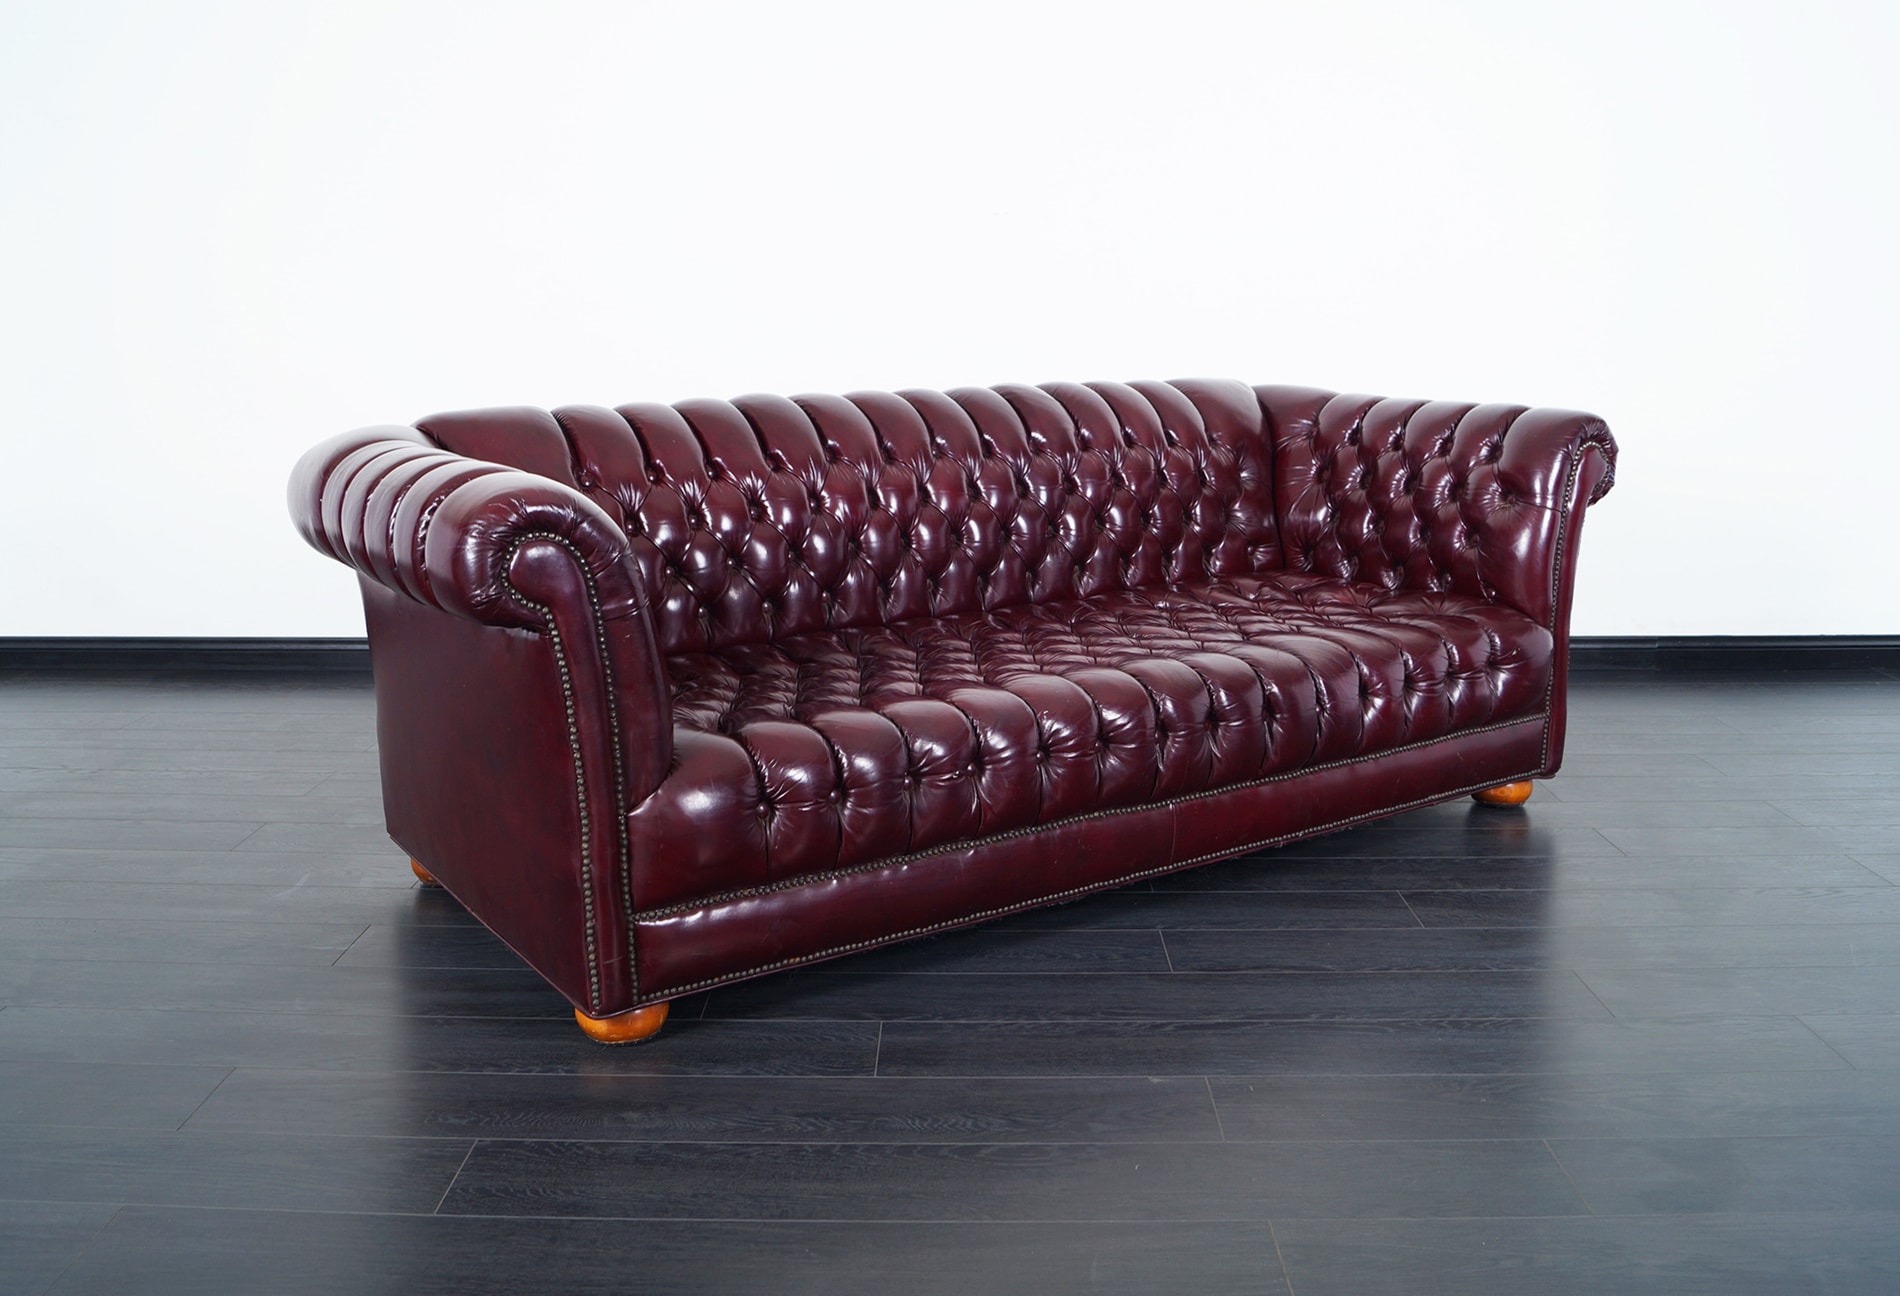 Vintage Burgundy Leather Chesterfield Sofa